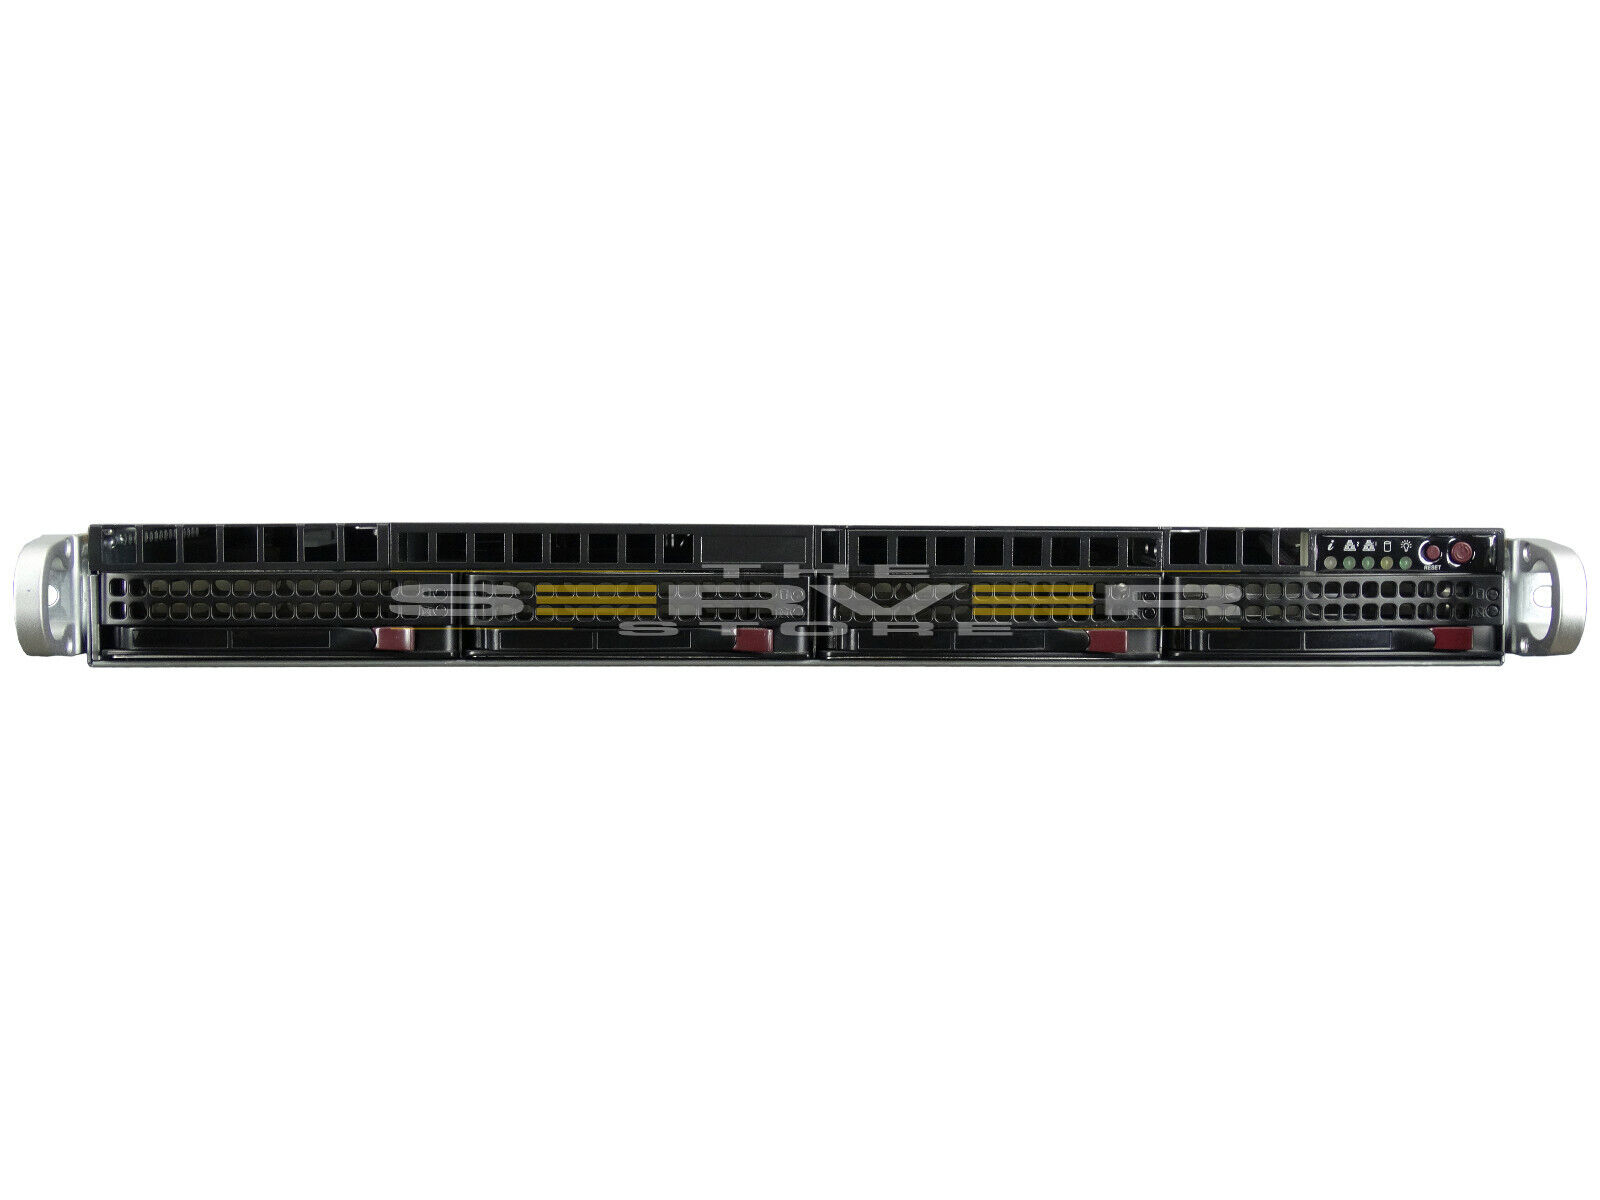 Supermicro 1U Firewall Barebone Server W/ X10SLH-N6-ST031 4x Trays W/ Rails